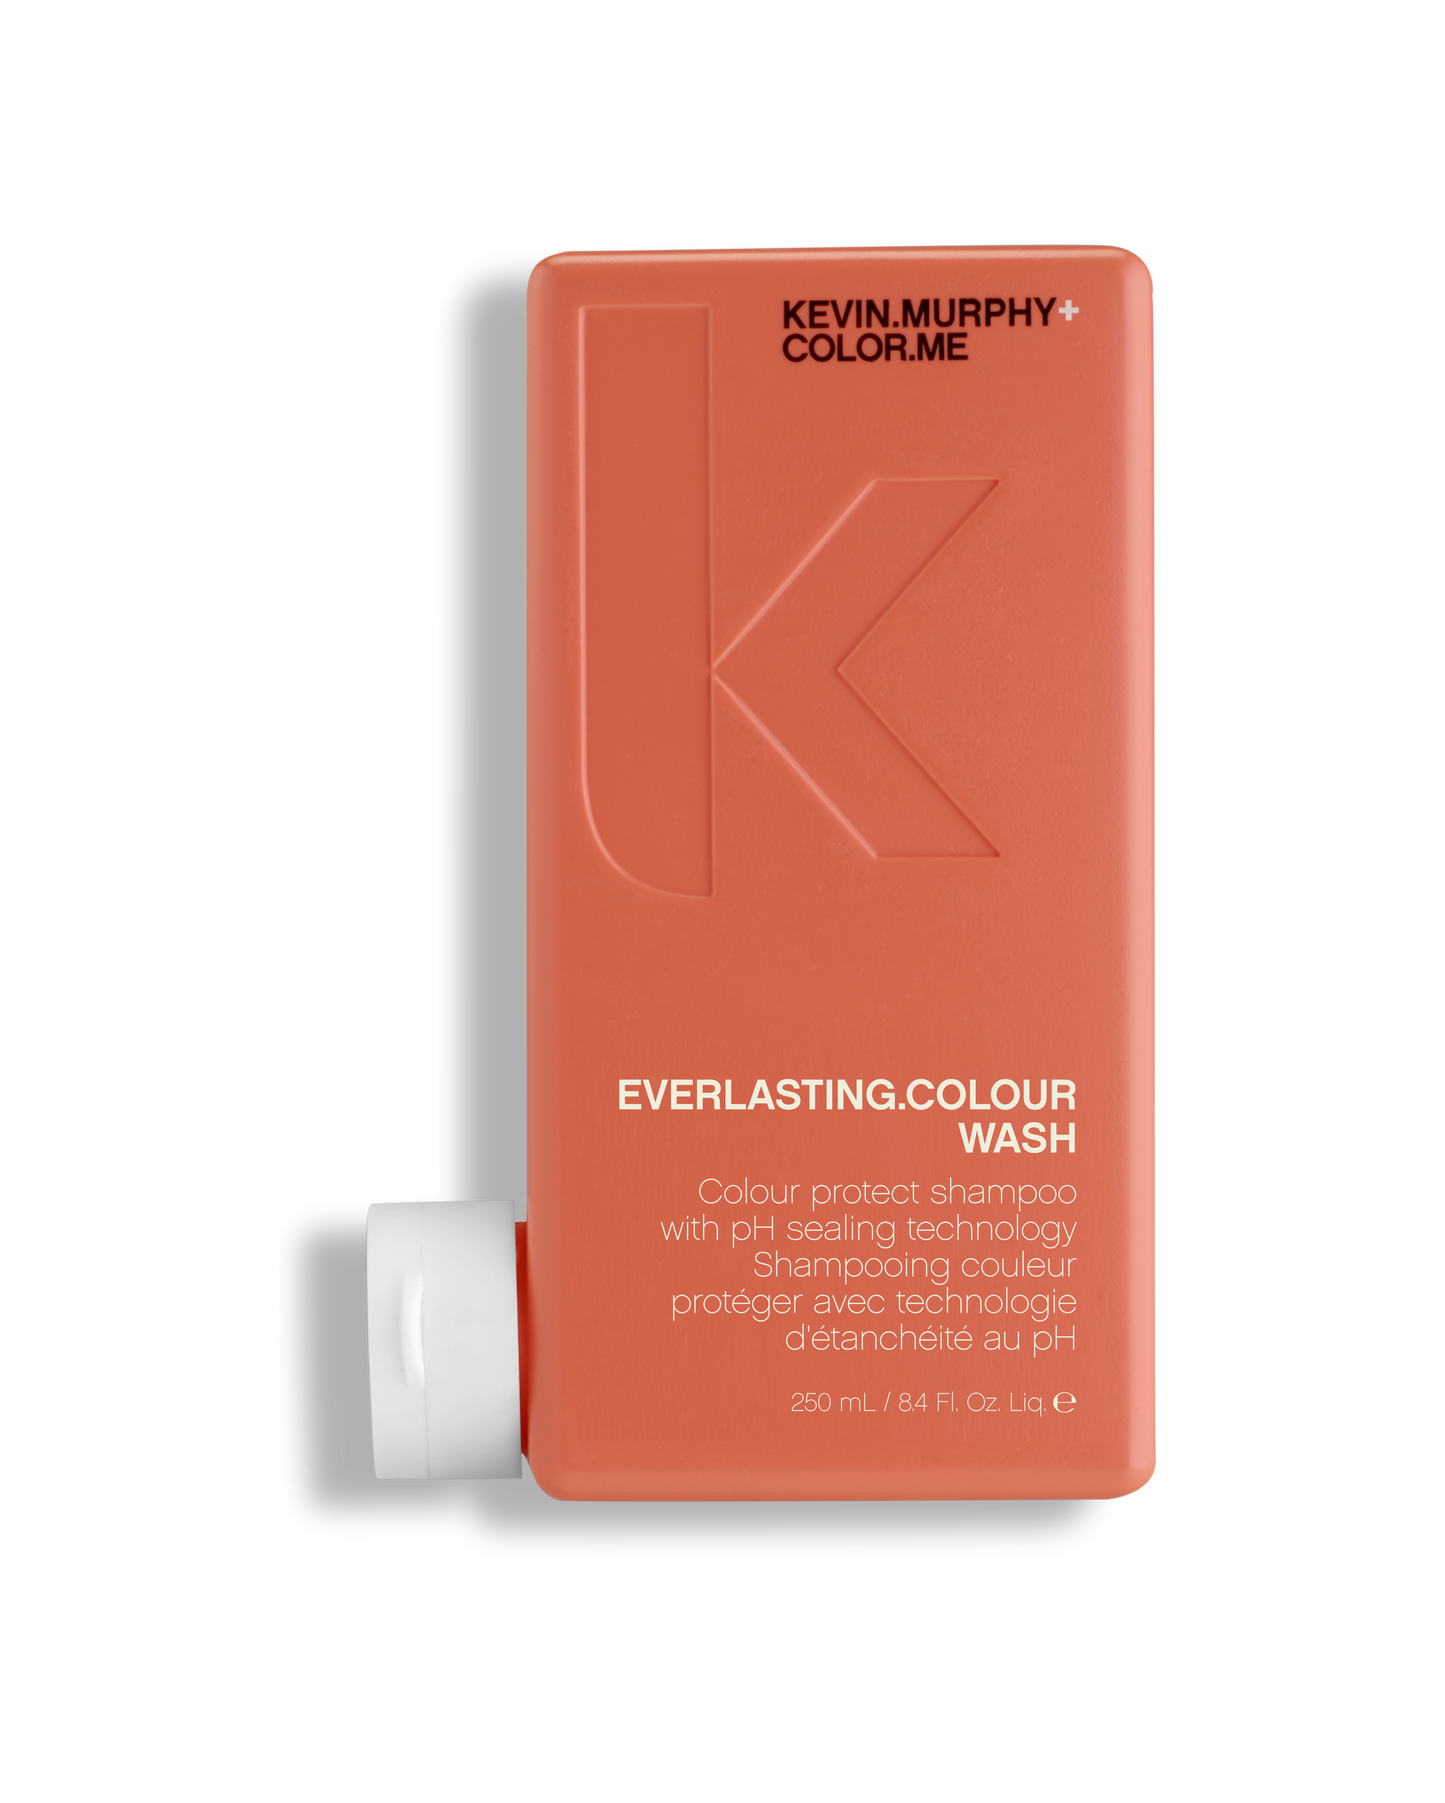 KEVIN.MURPHY Everlasting Colour Wash Shampoo